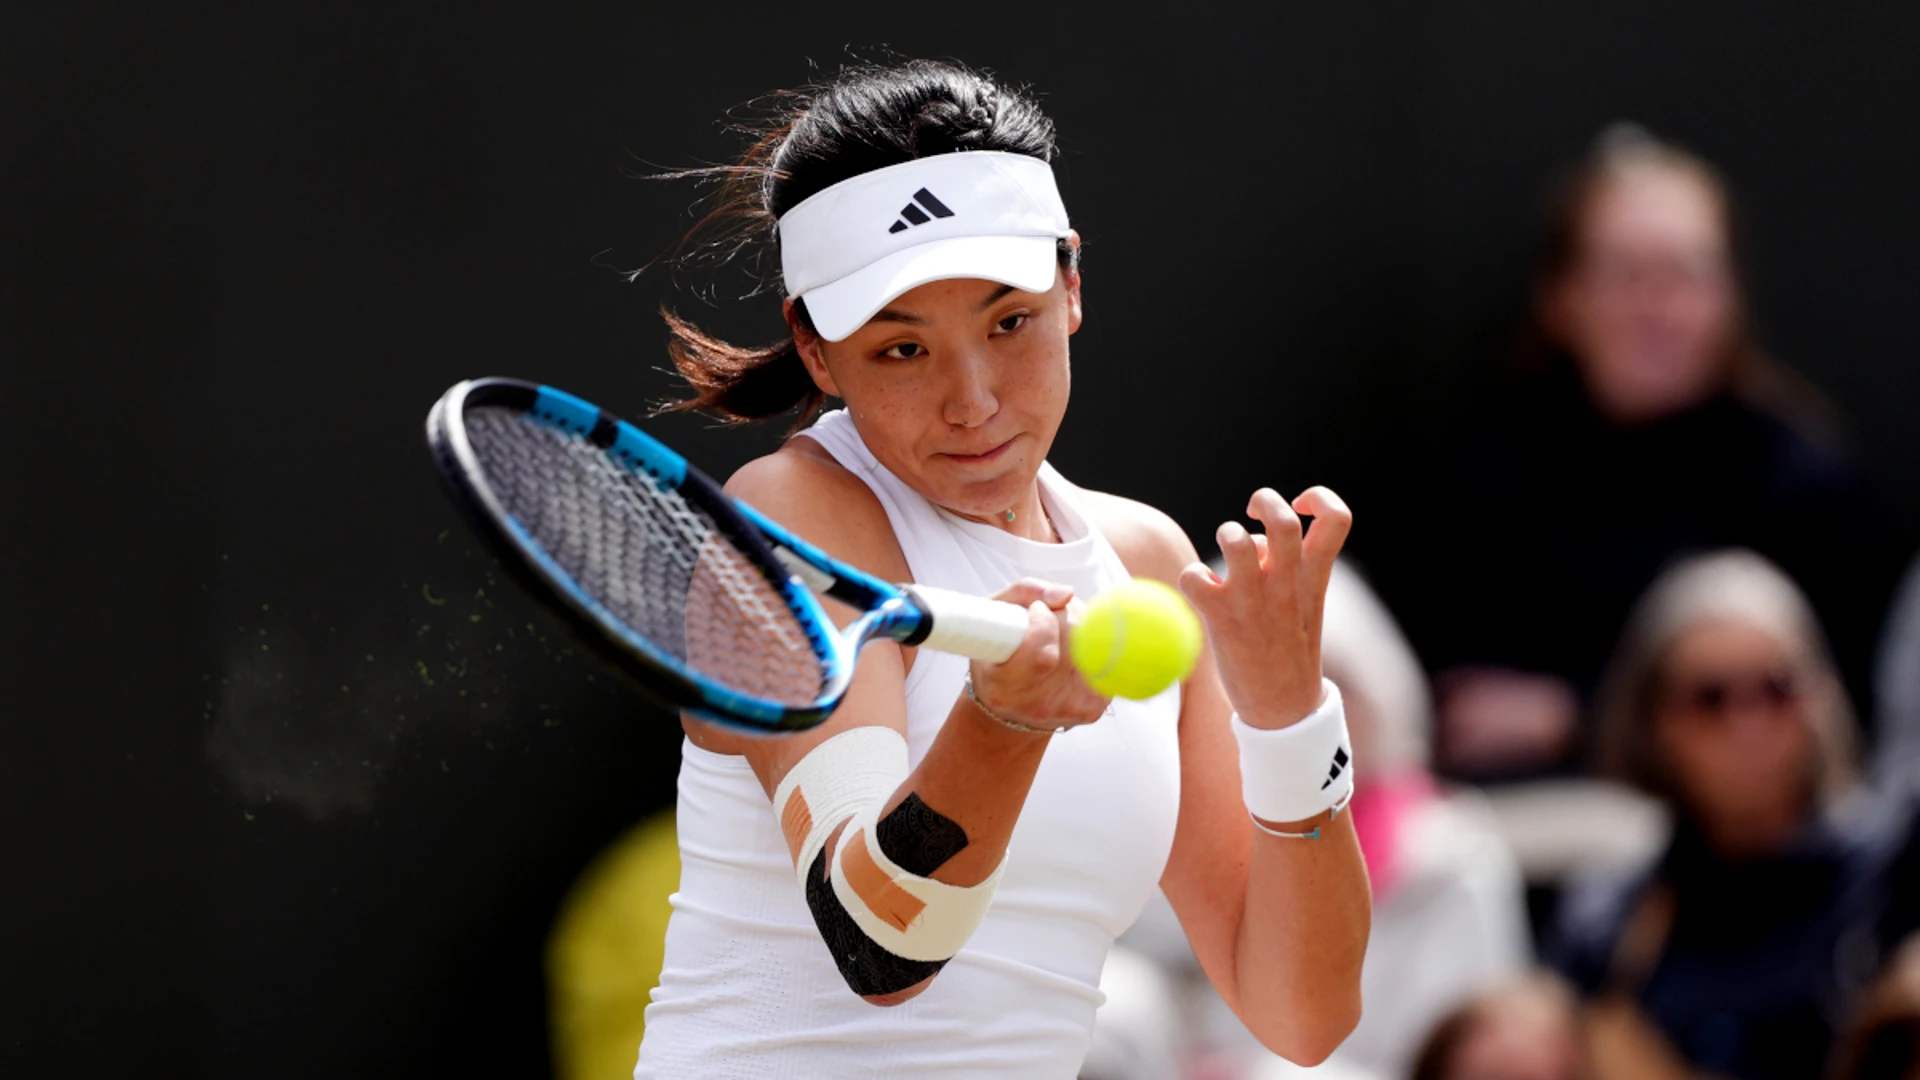 Wang defeats tearful Dart in Wimbledon third round